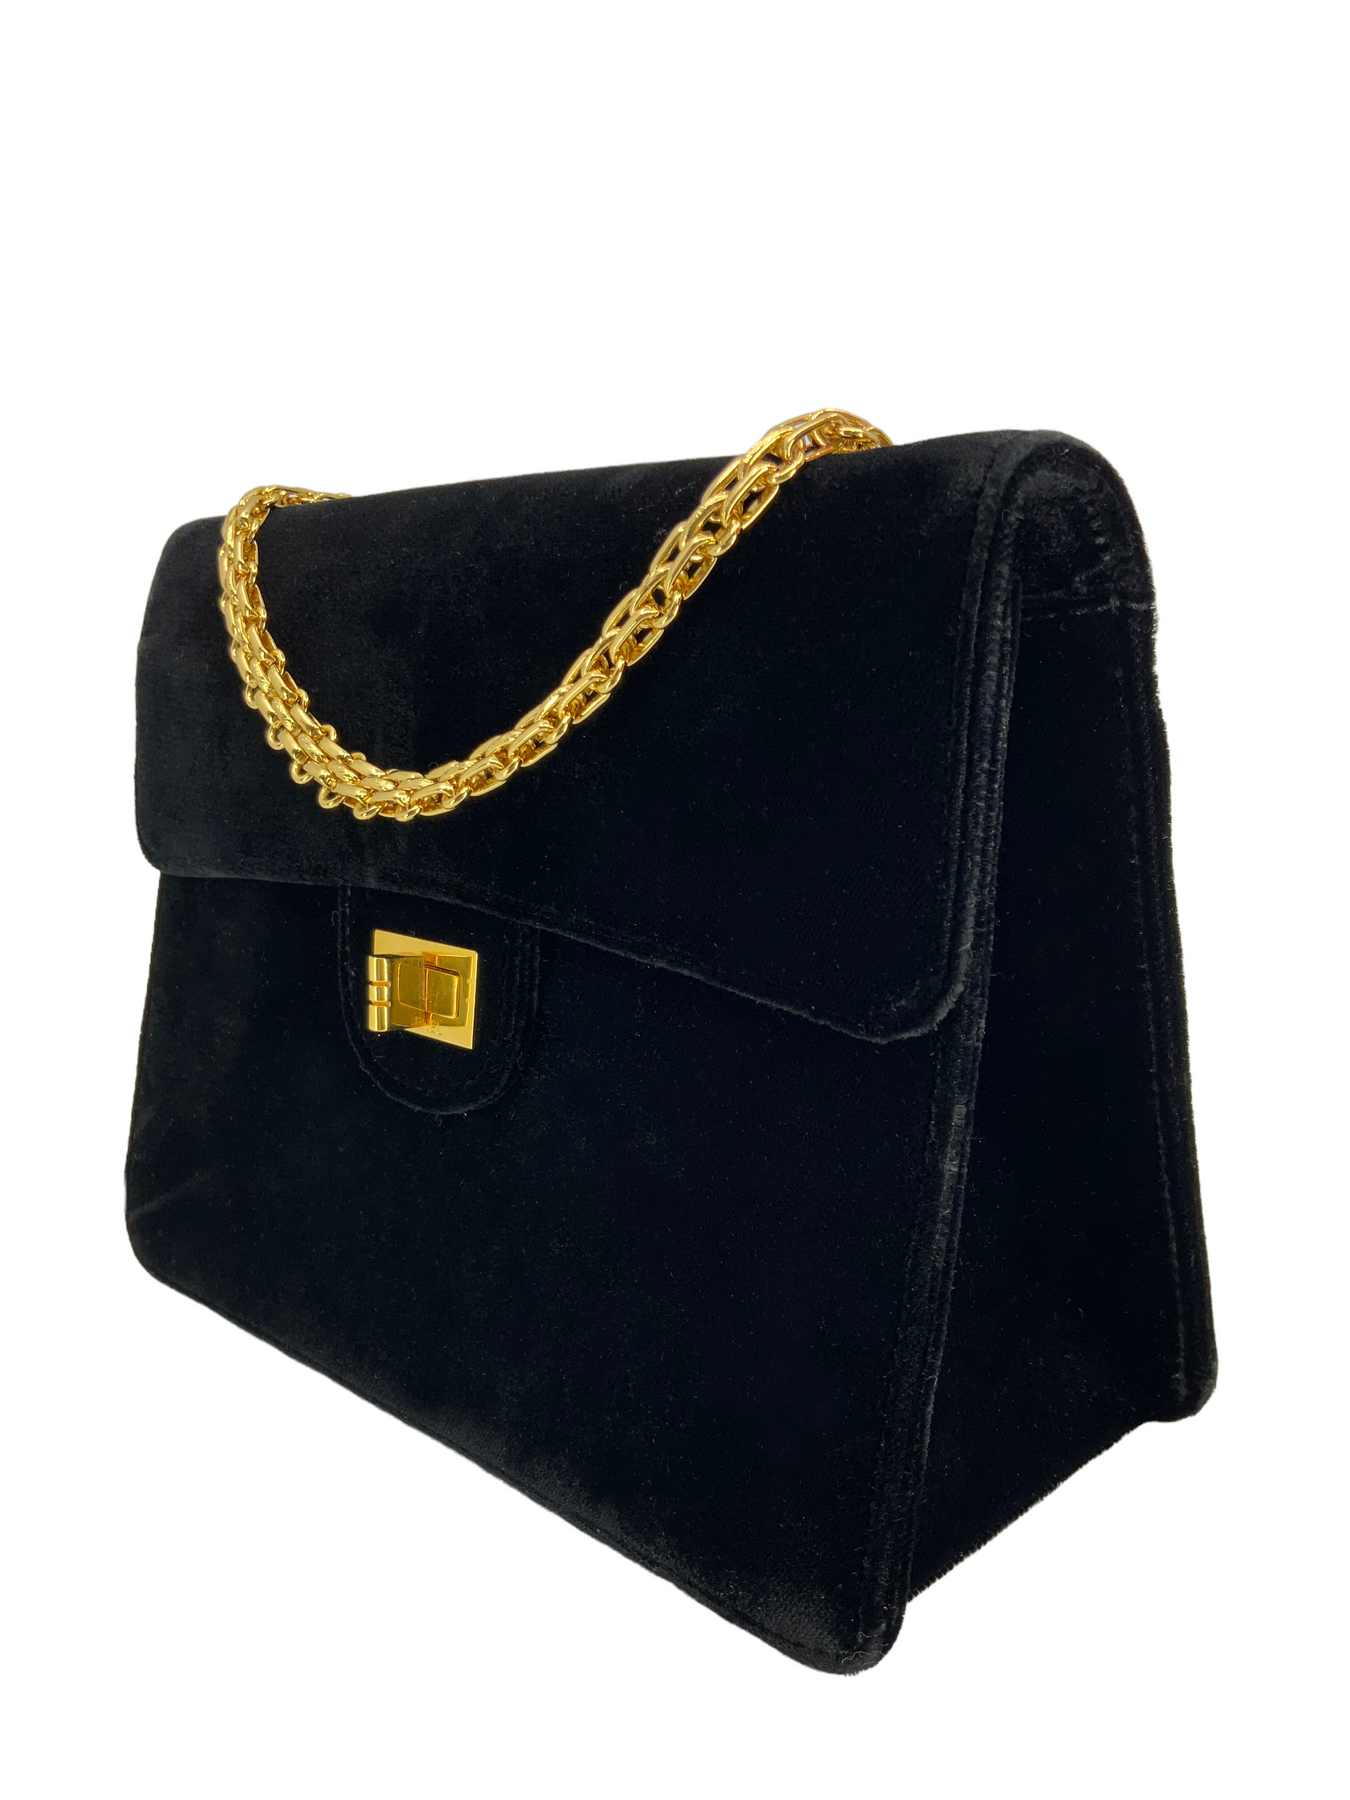 Rare Vintage Late 60's CHANEL Mademoiselle Bag